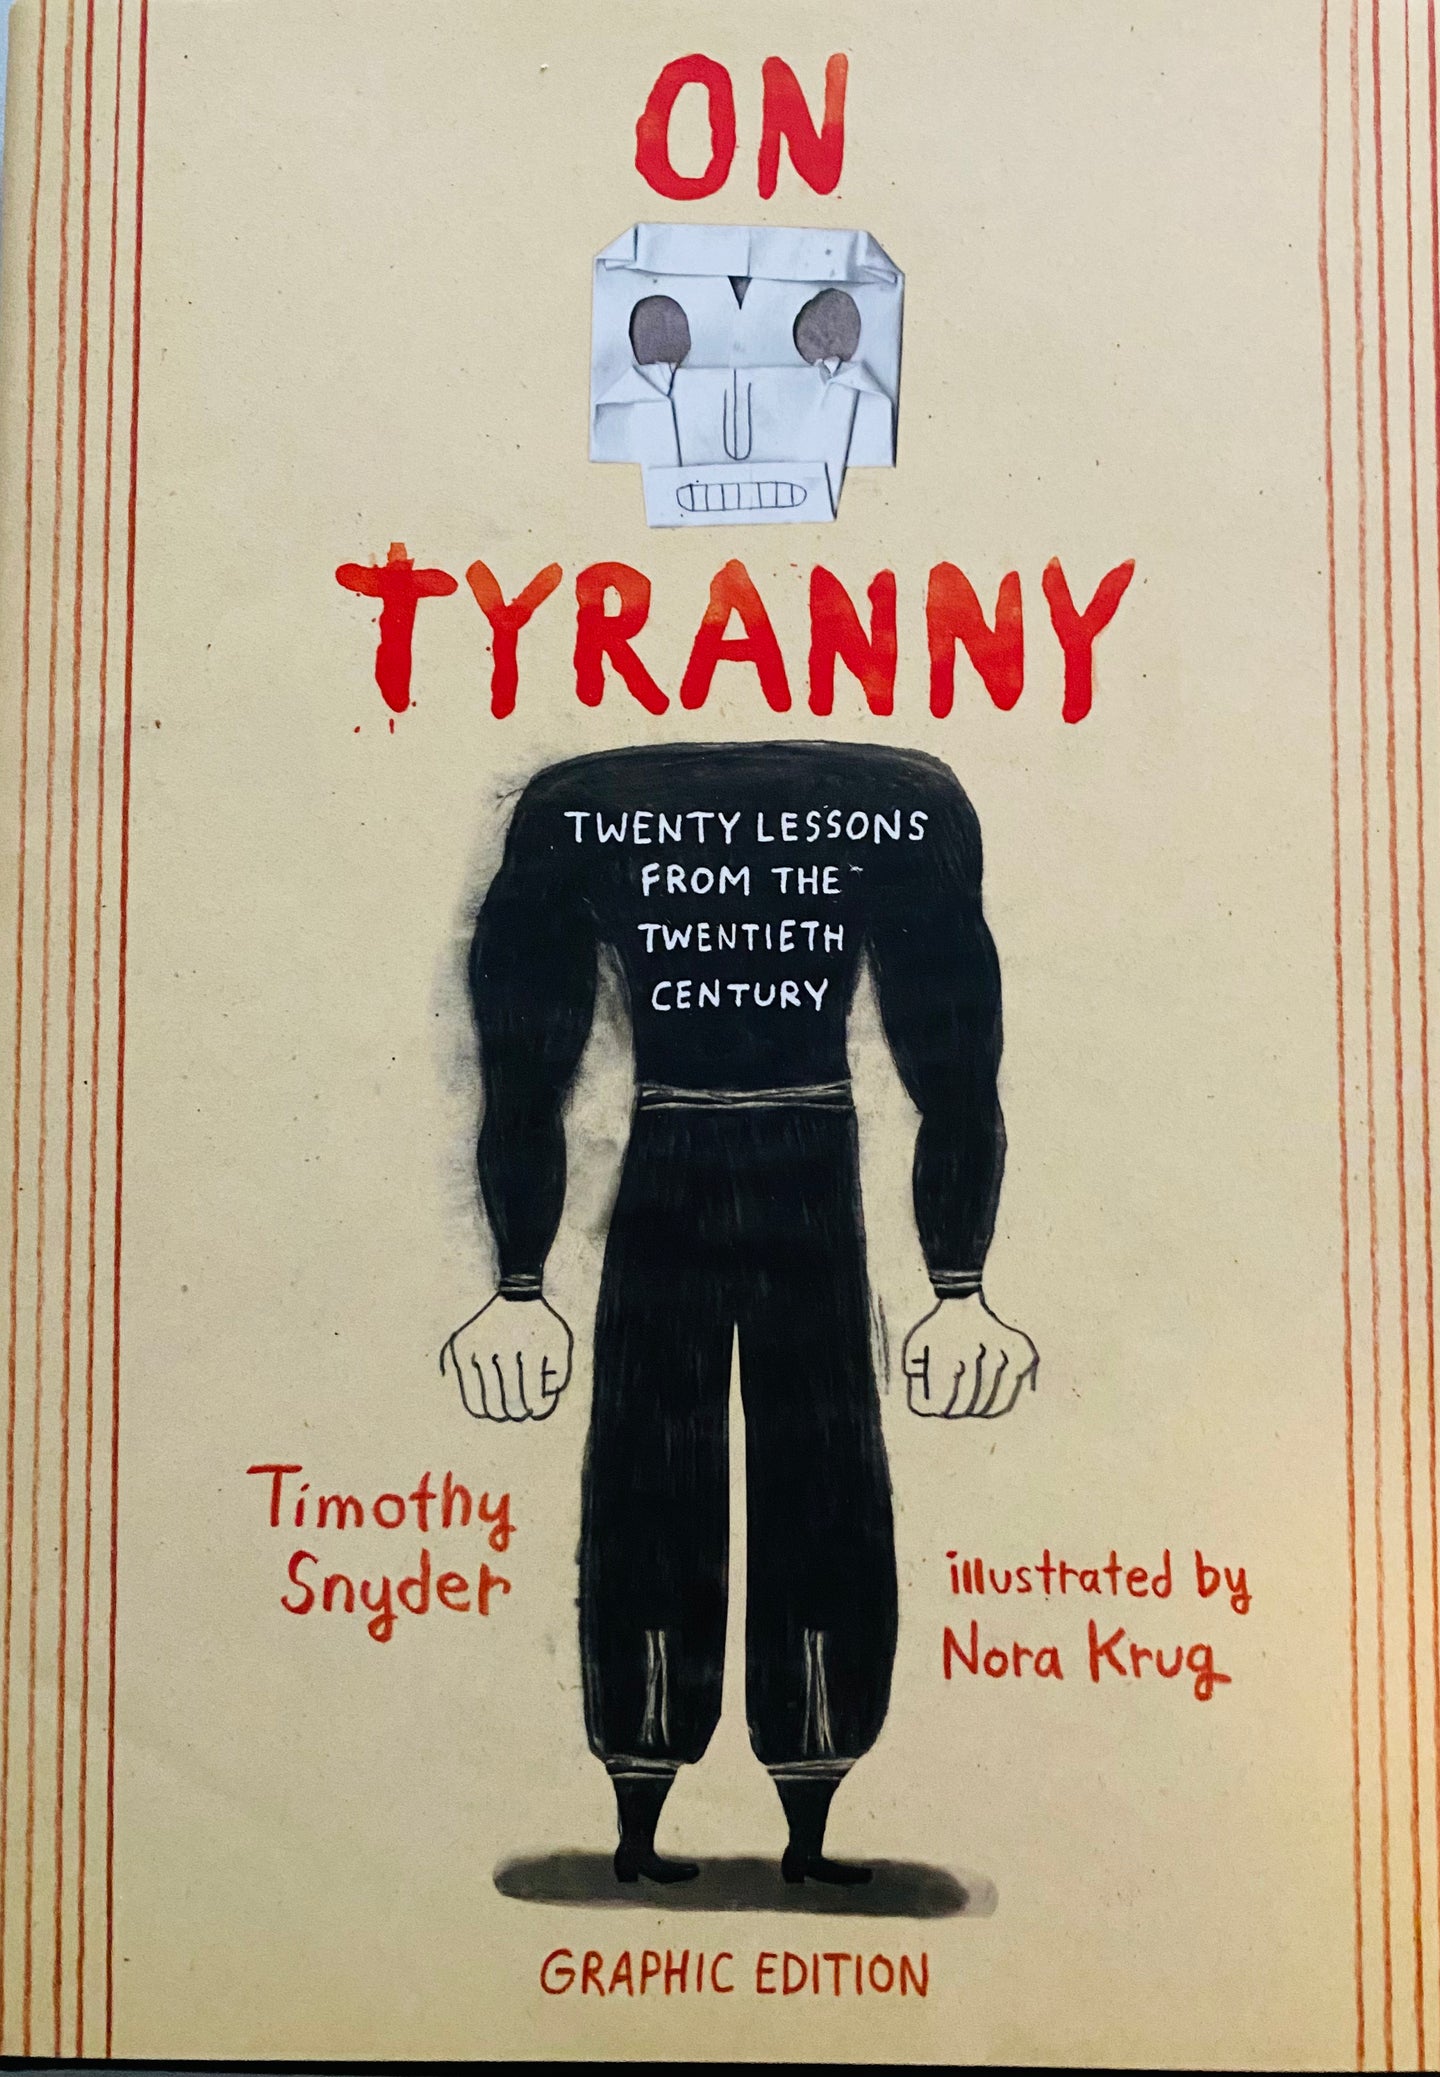 On Tyranny    Graphic Edition